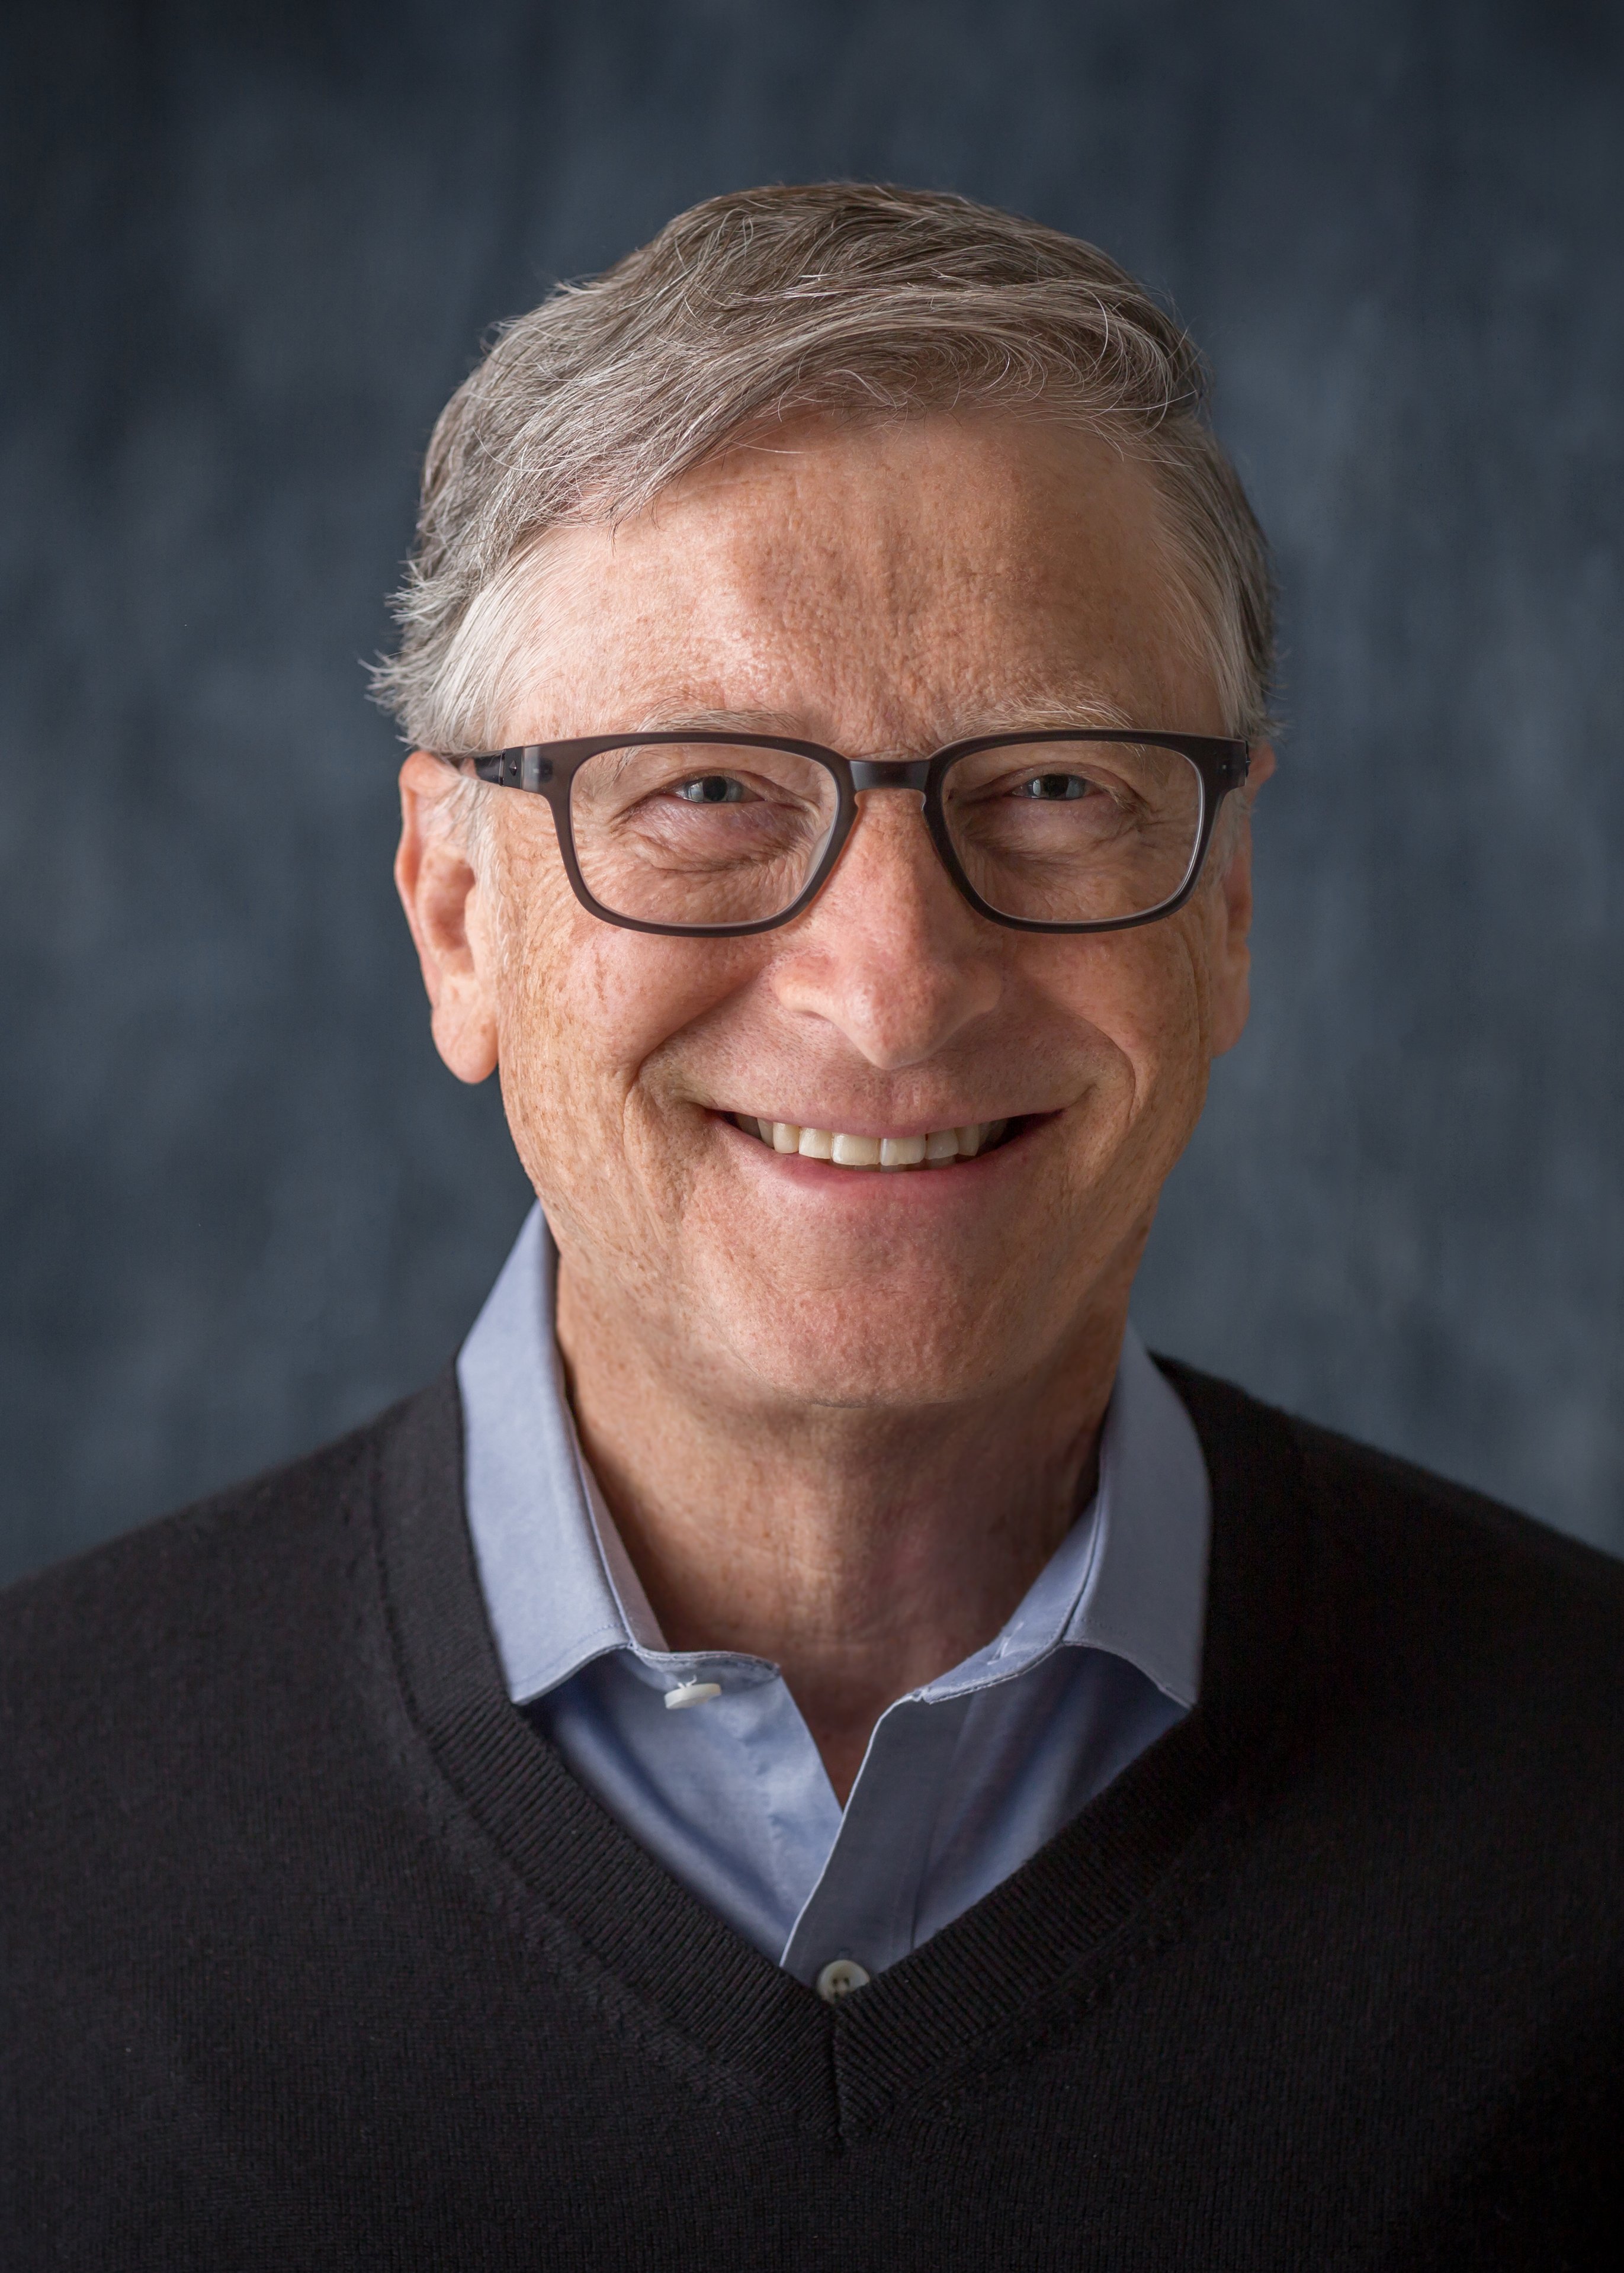 Bill_Gates-Headshot-Portrait-001